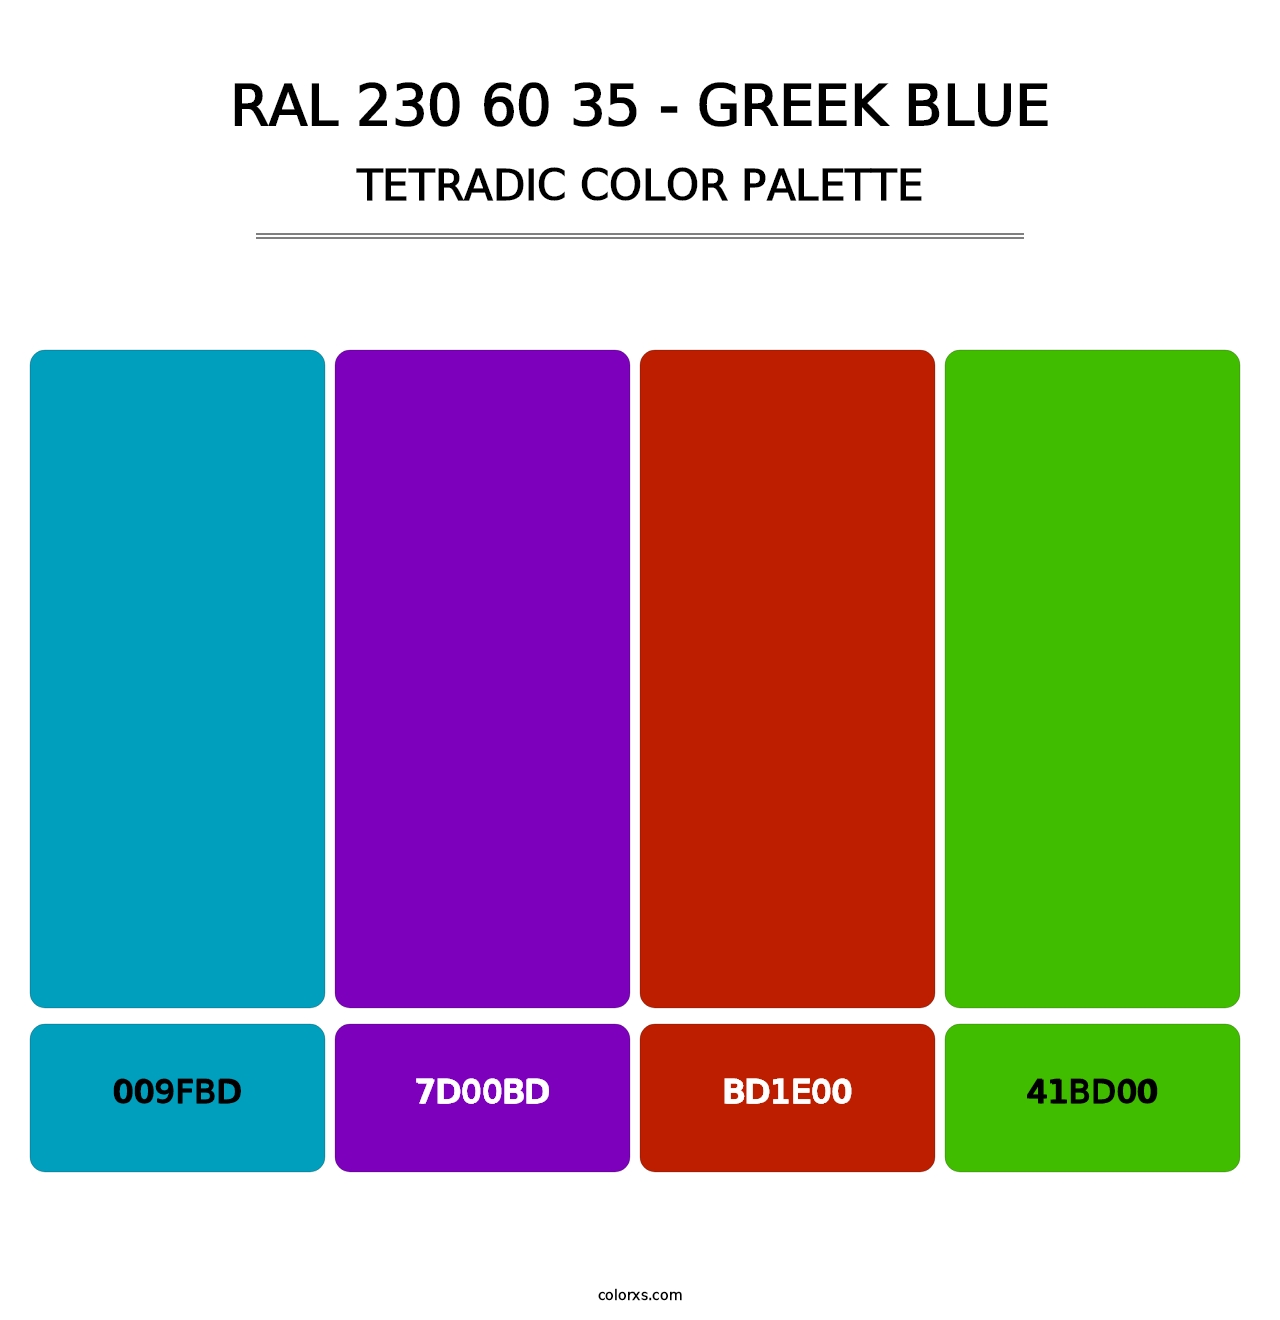 RAL 230 60 35 - Greek Blue - Tetradic Color Palette